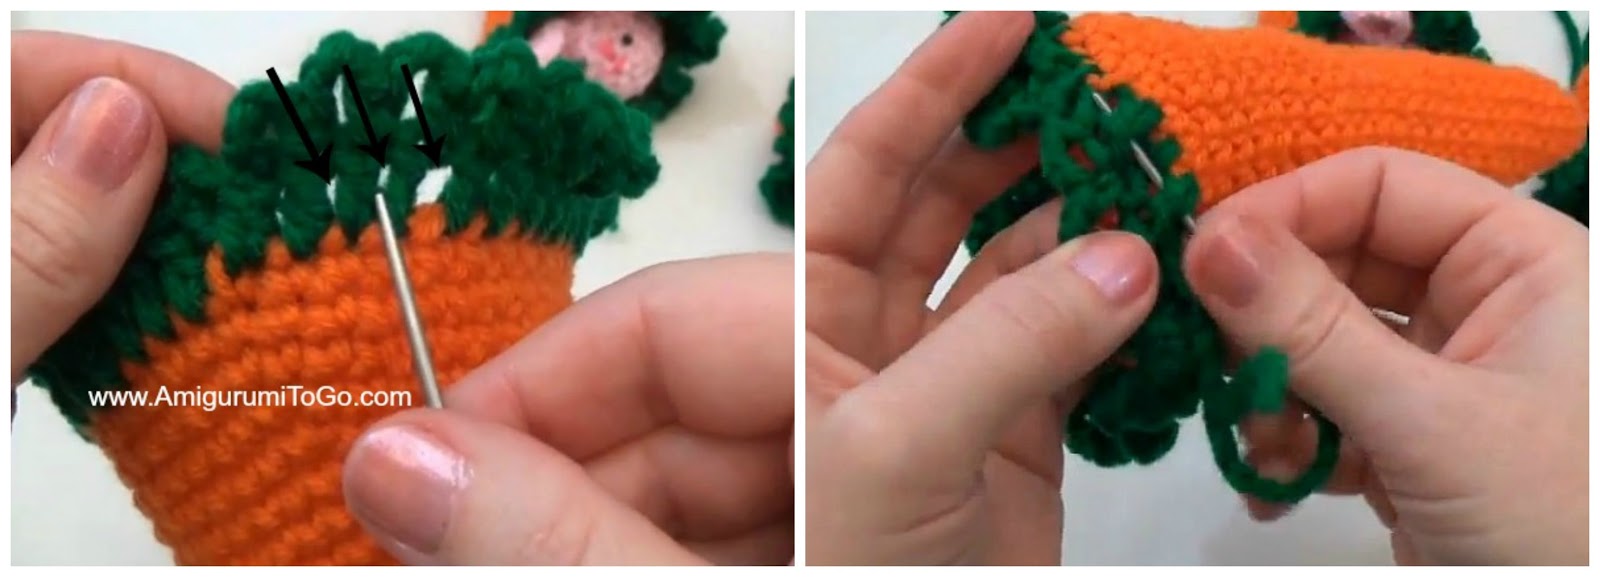 Pattern:crochet Bunny Drawstring Bag Amigurumi Carrot Pouch 